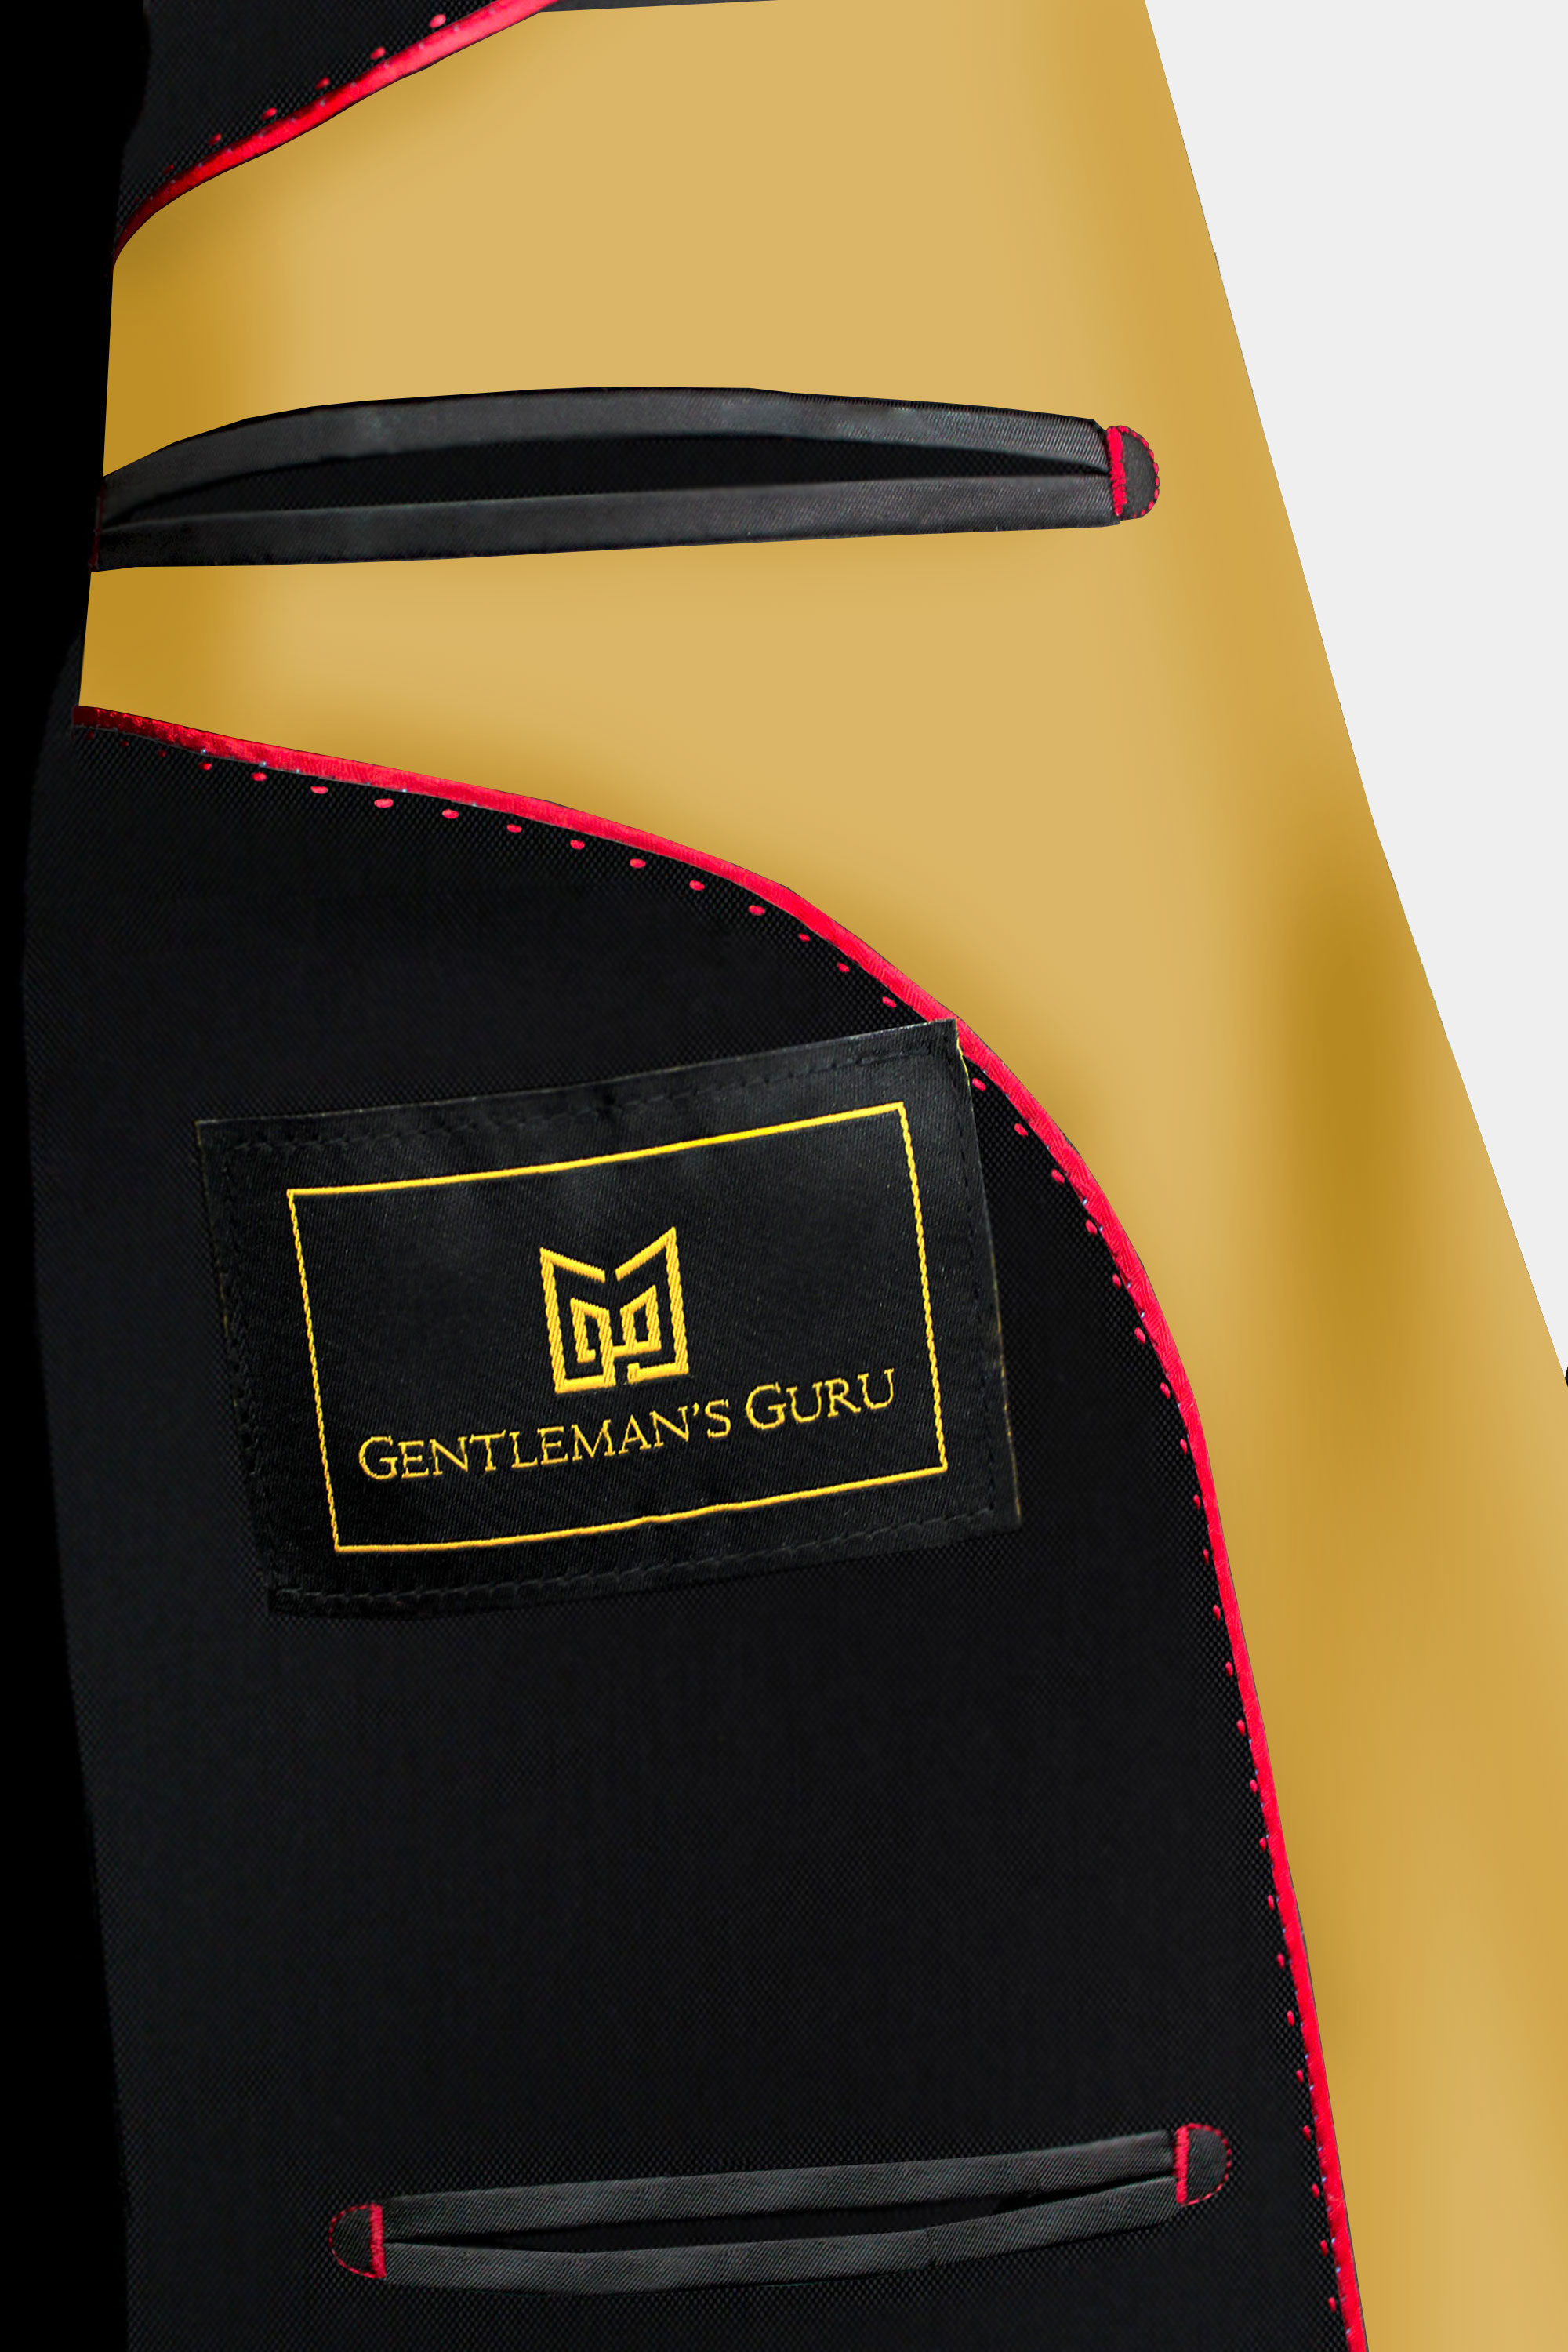 Inside-Black-and-Gold-Tuxedo-Jacket-from-Gentlemansguru.com